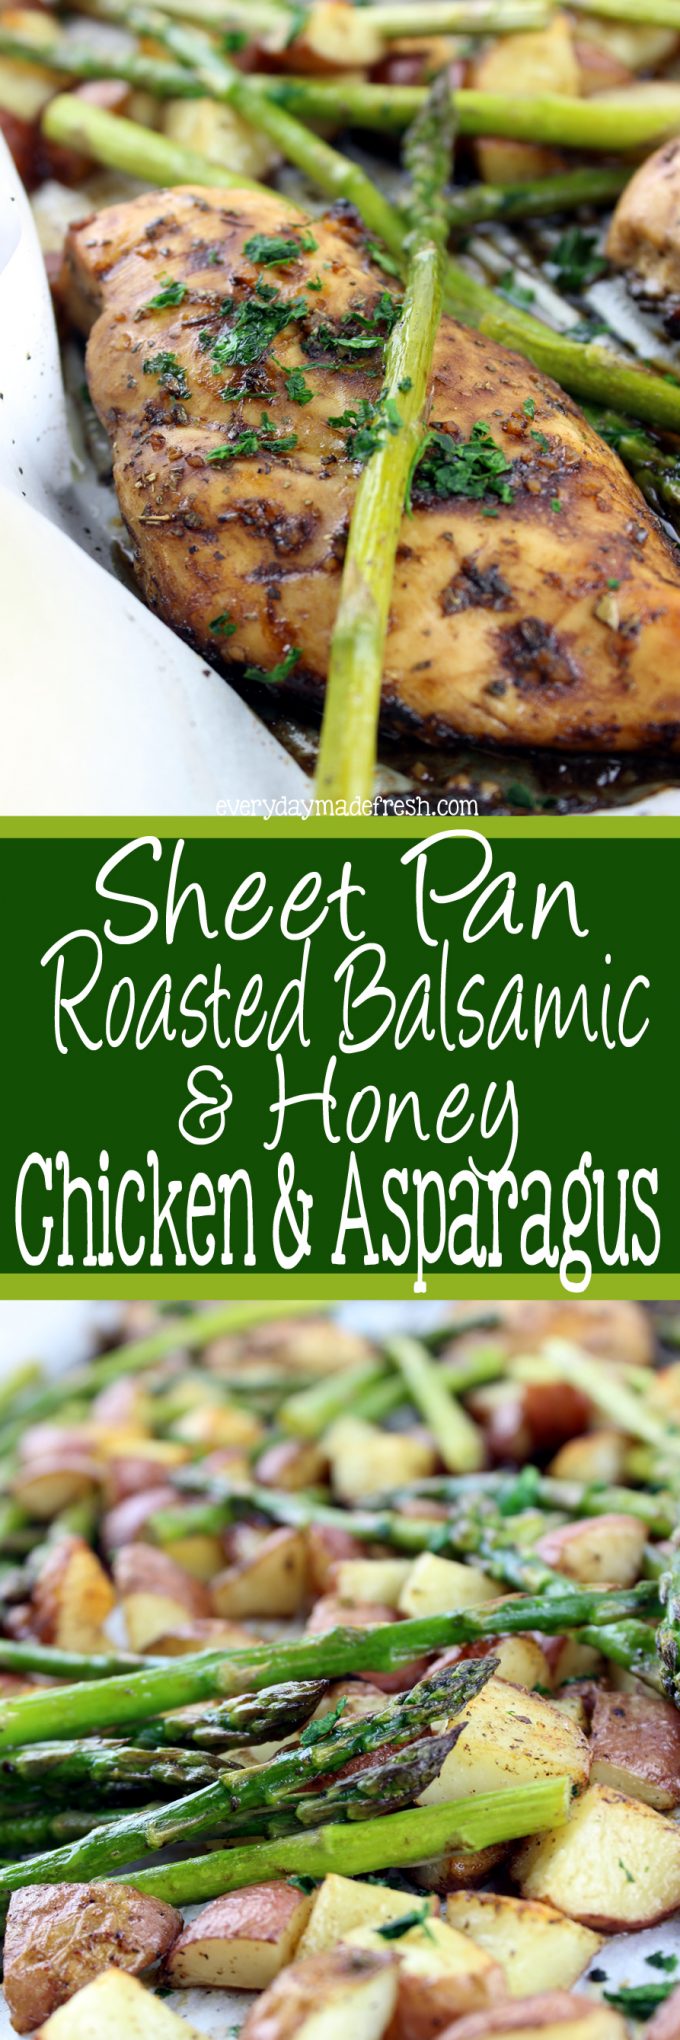 Sheet Pan Roasted Balsamic & Honey Chicken & Asparagus ...